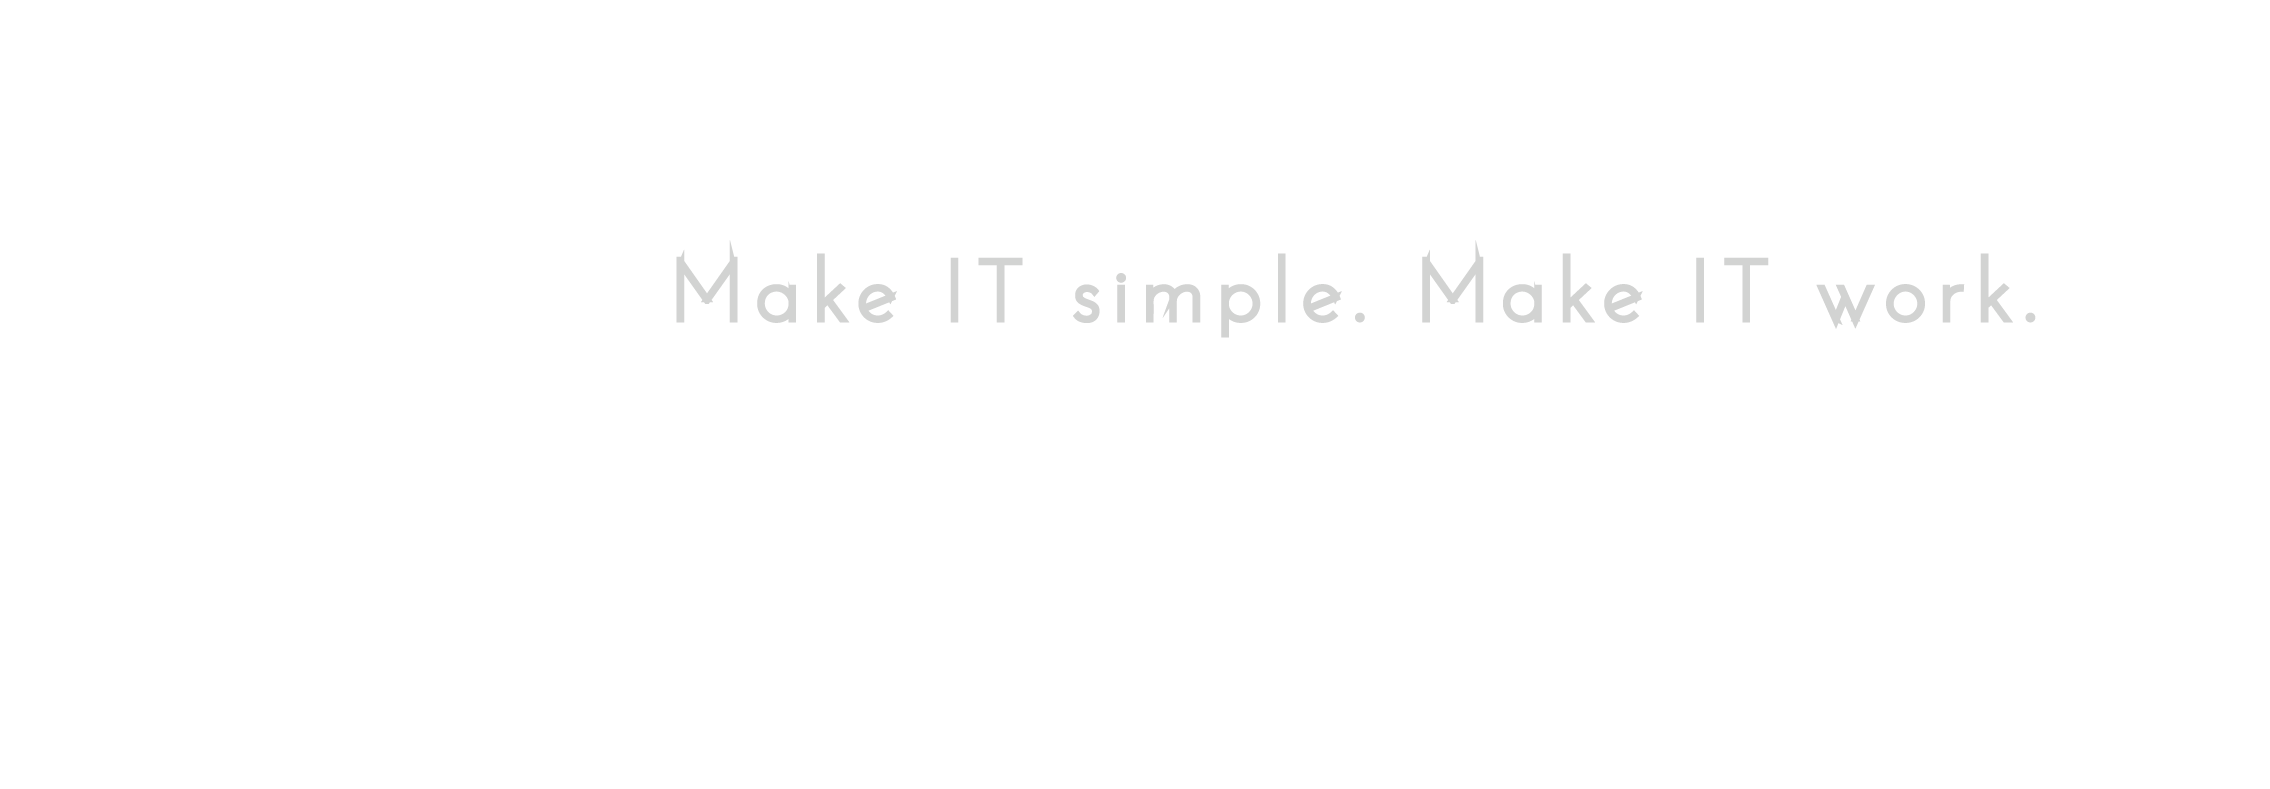 Computer Wizard Assistenza informatica logo desktop